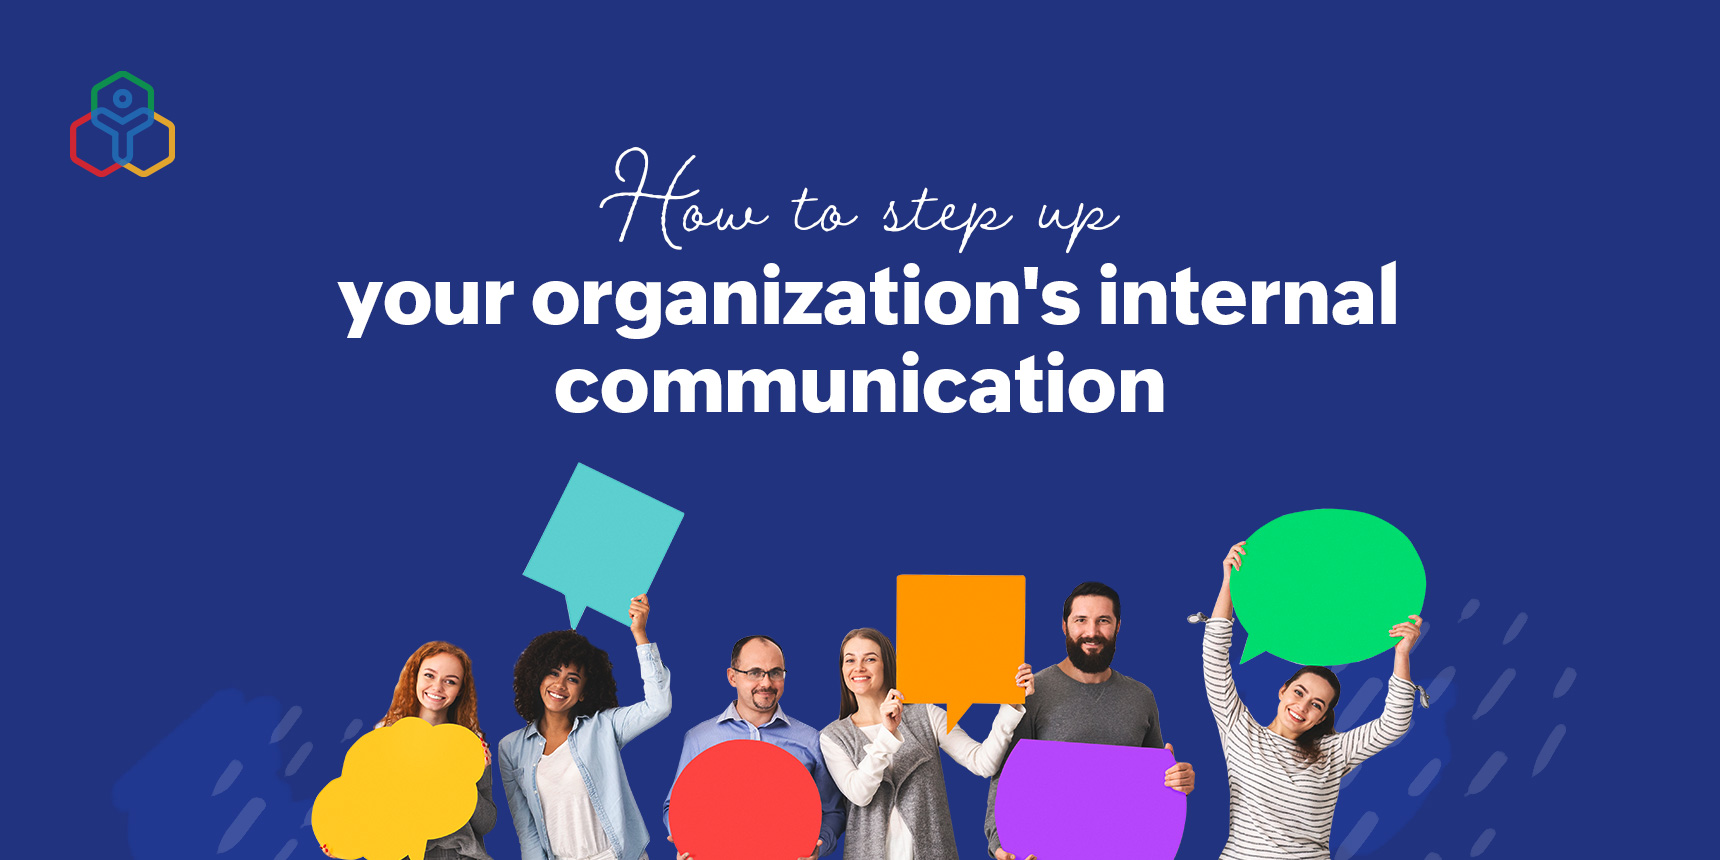 Improving internal communication at organization